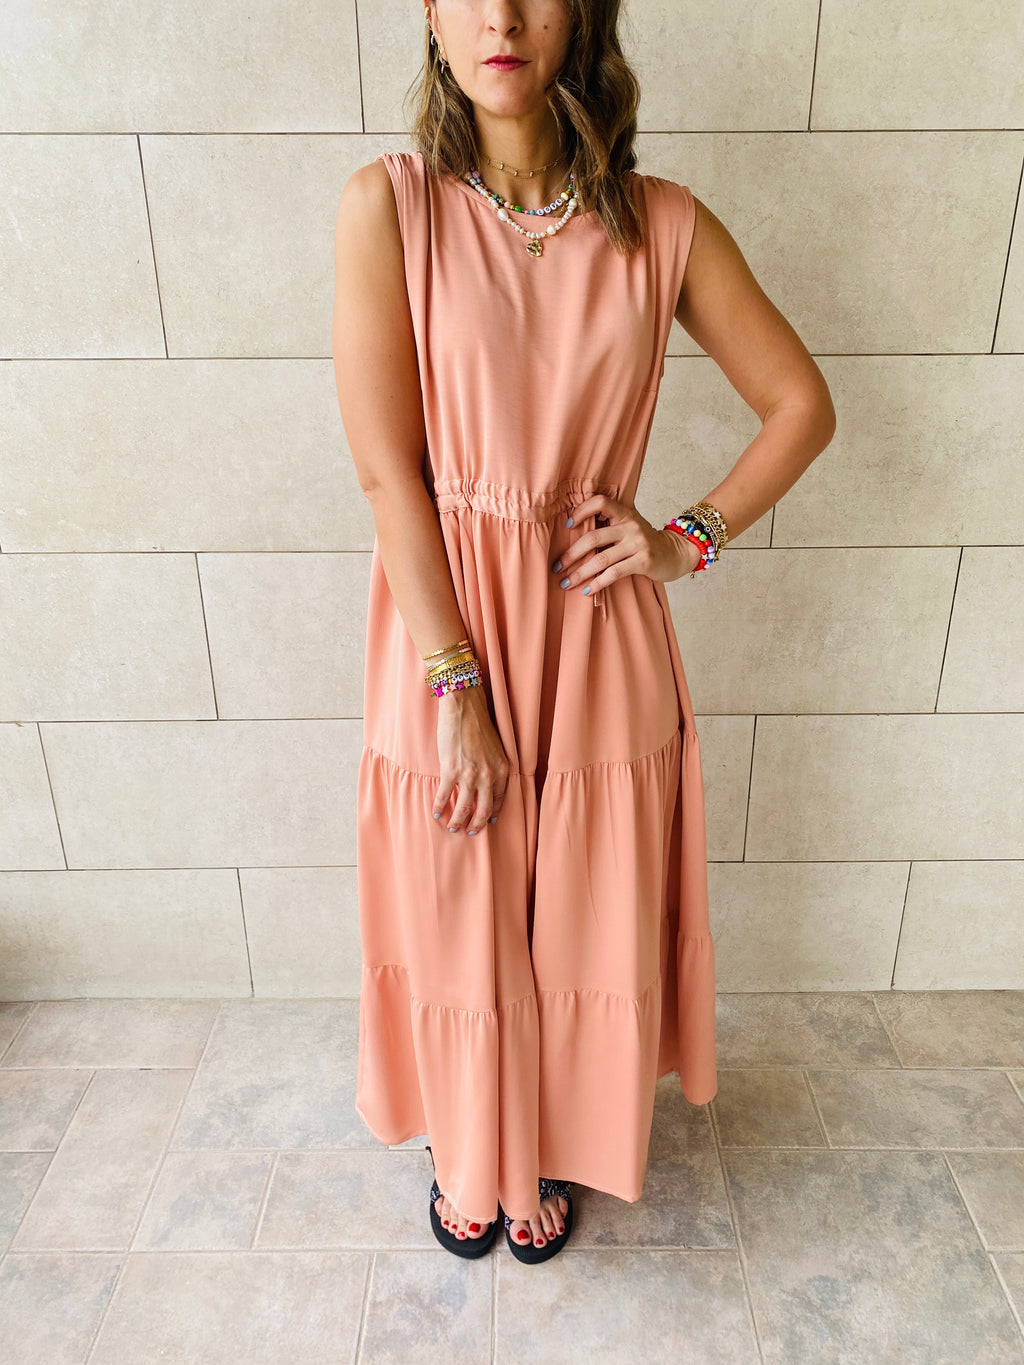 Peach Satin Feel Summer Dress